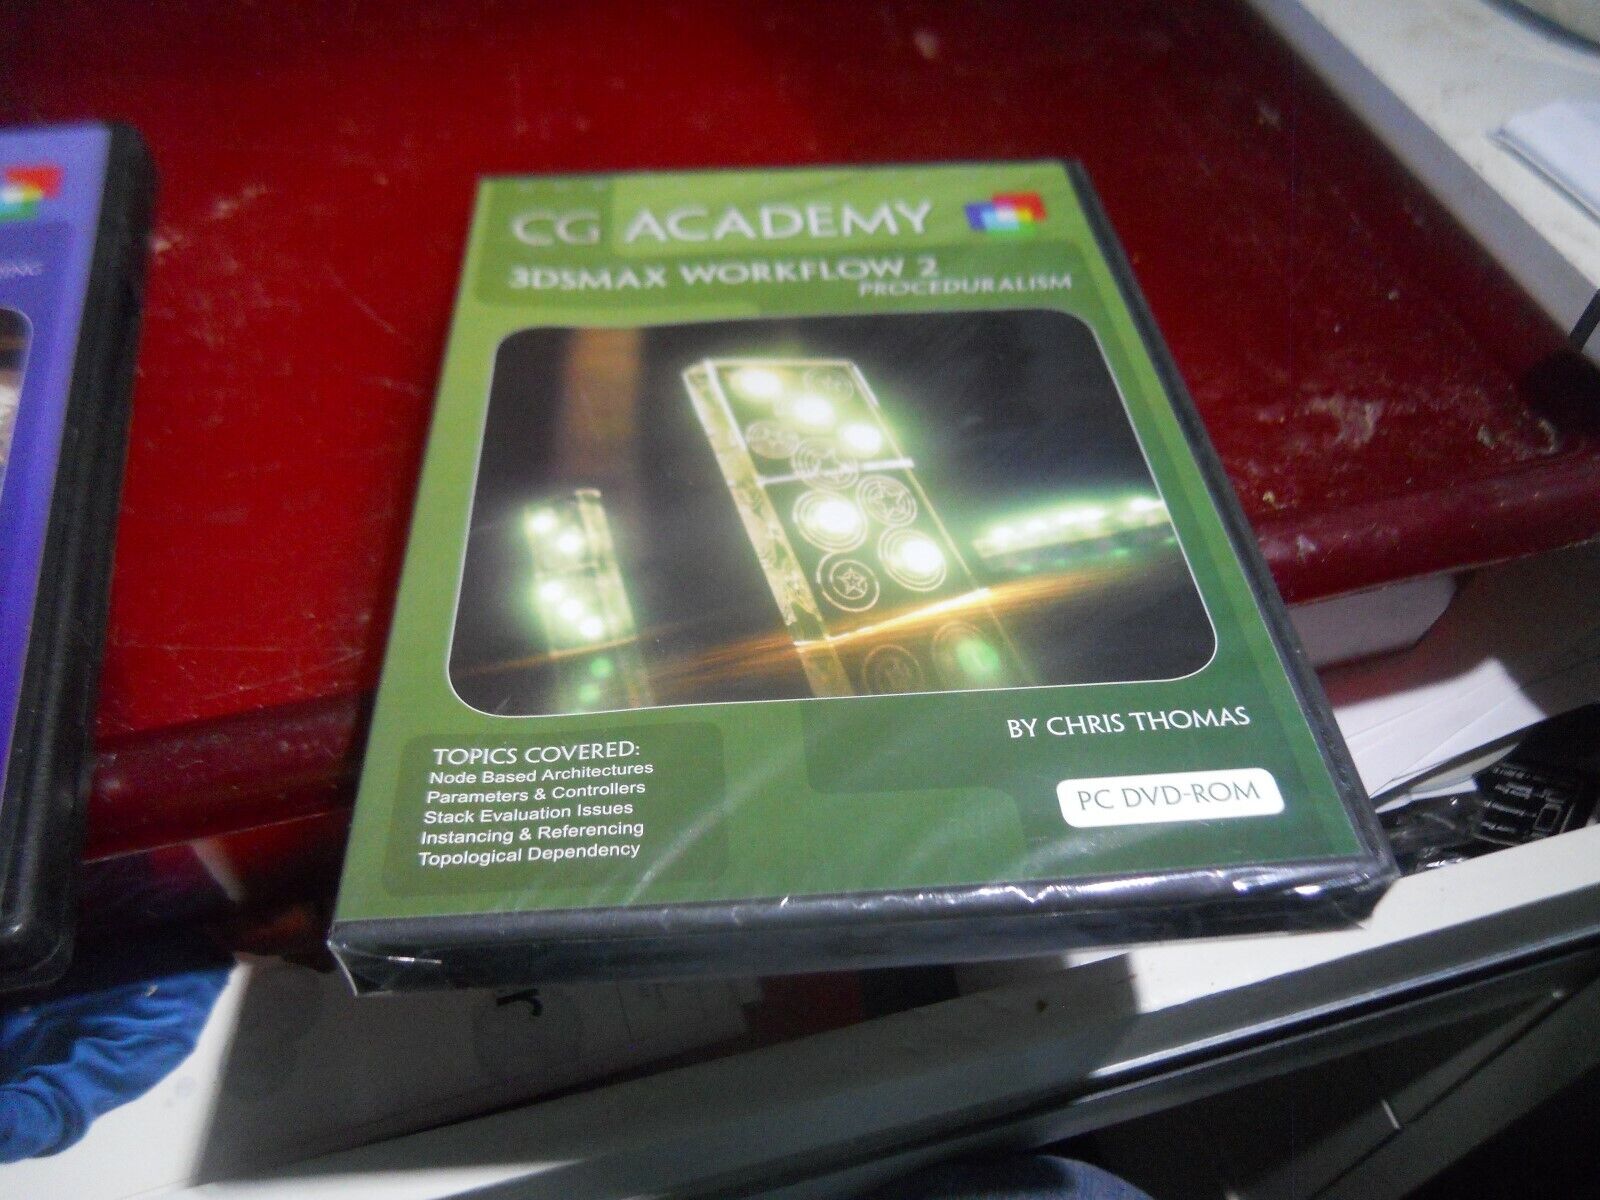  CG Academy RARE= 3DS WORKFLOW 2 PROCEDURALISM PC DVD-ROM BY CHRIS THOMAS NEW 